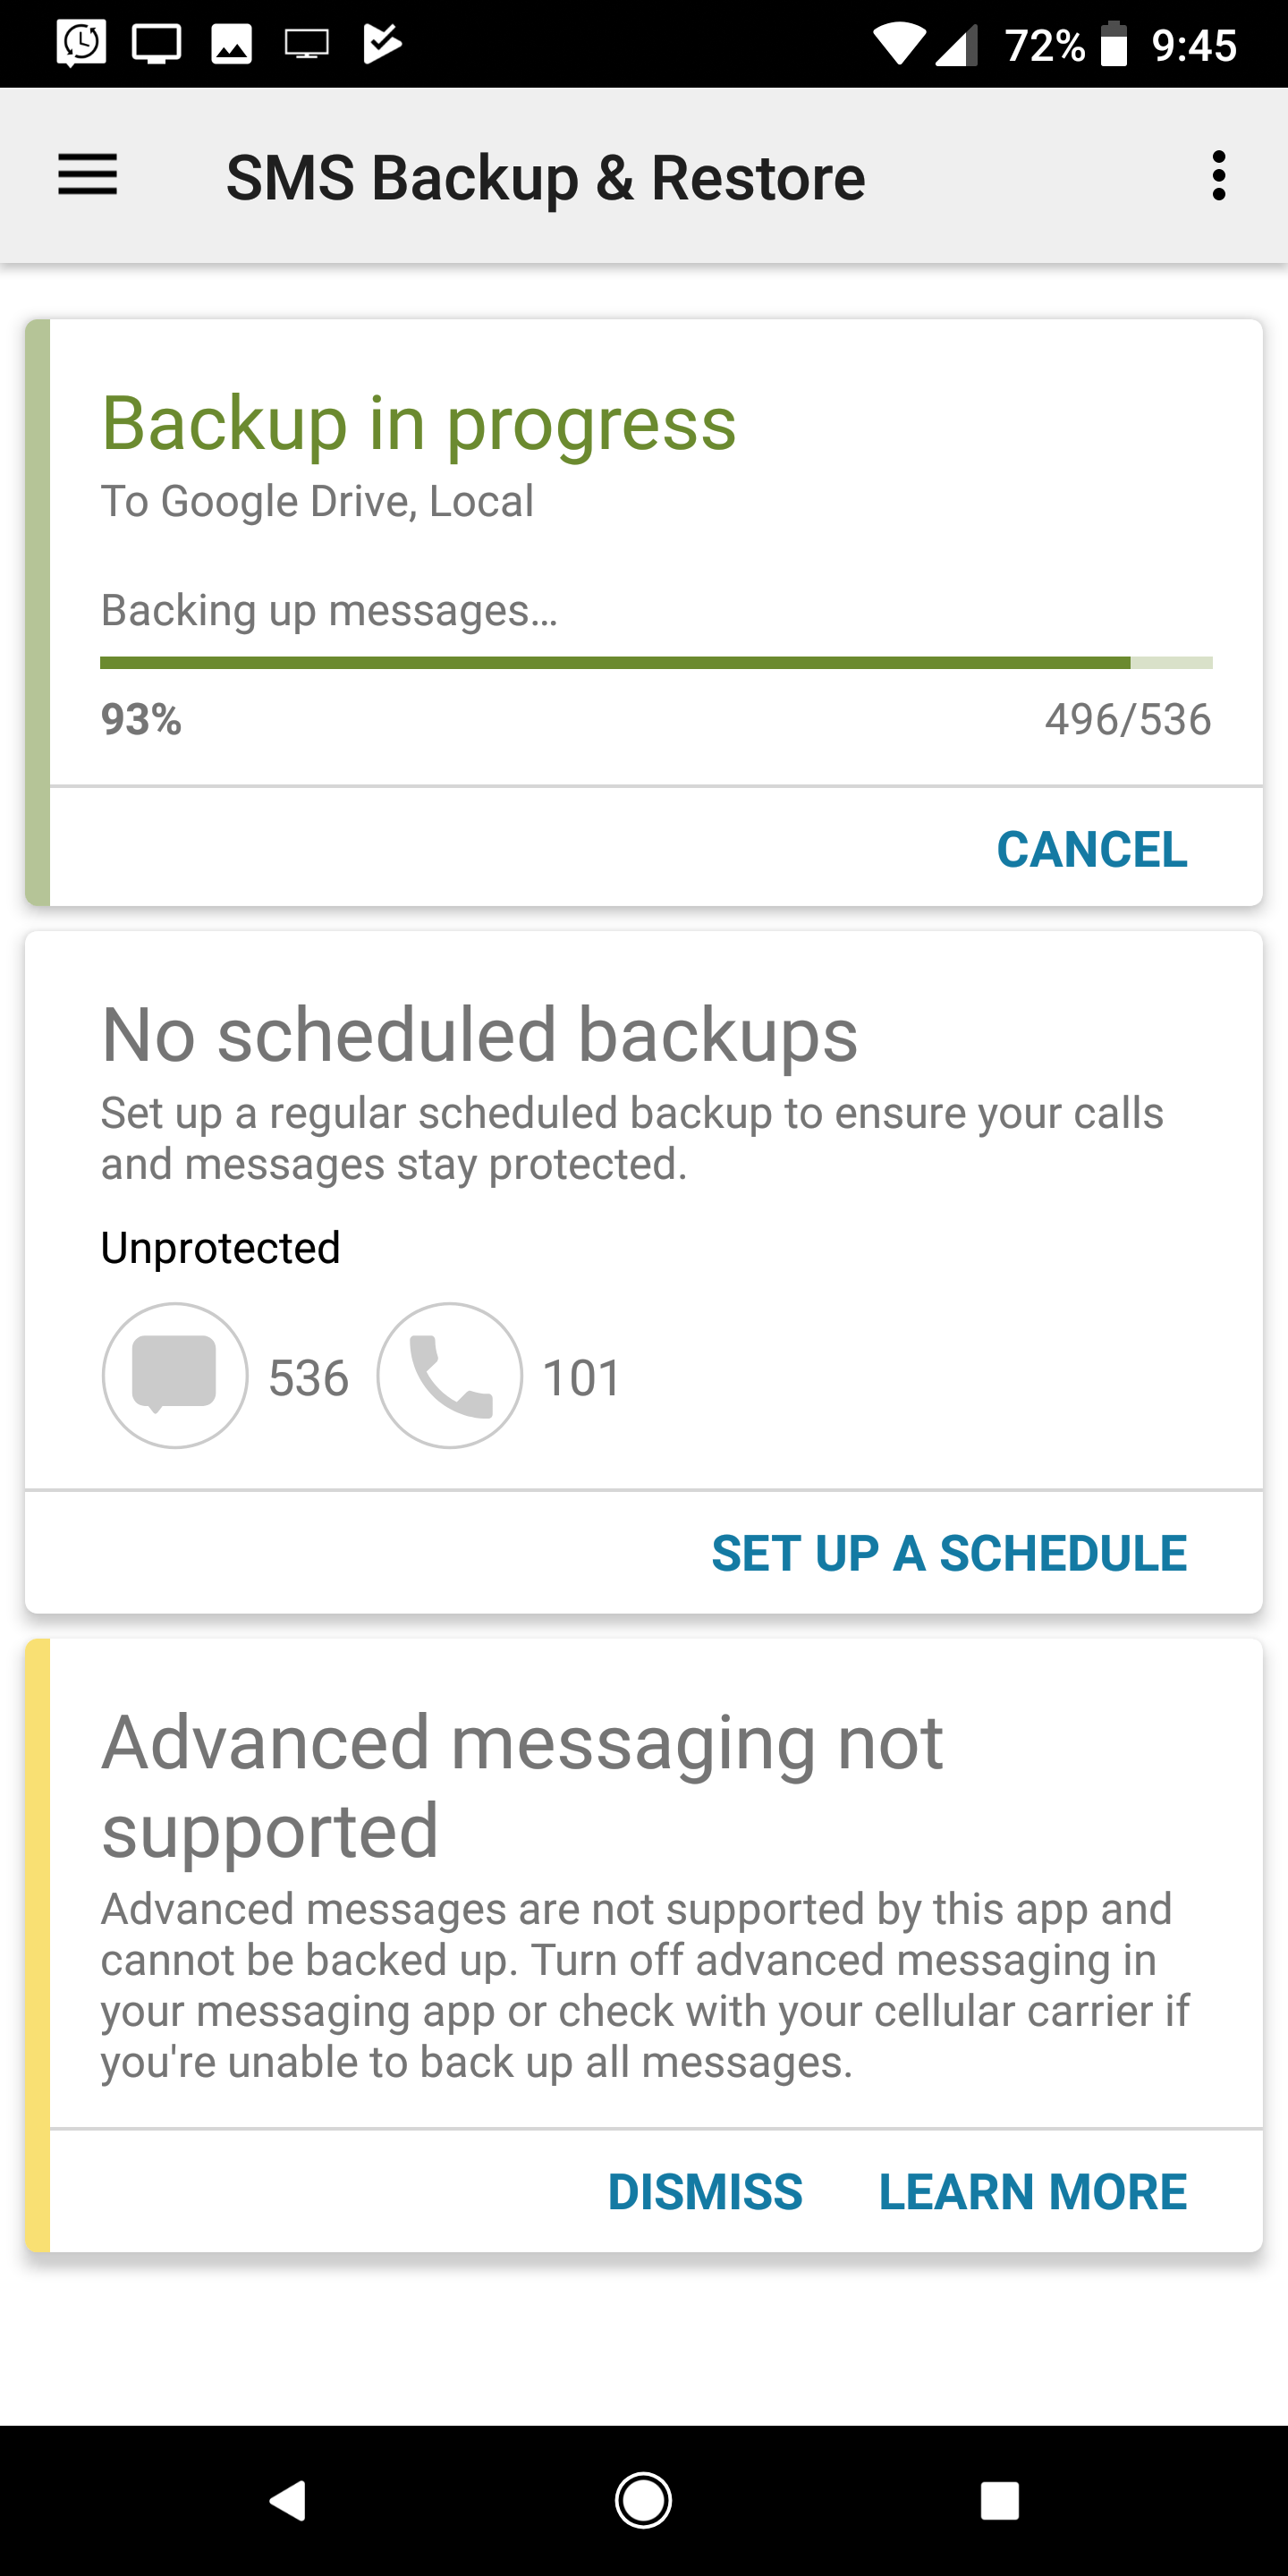 sms backup app where on google stored